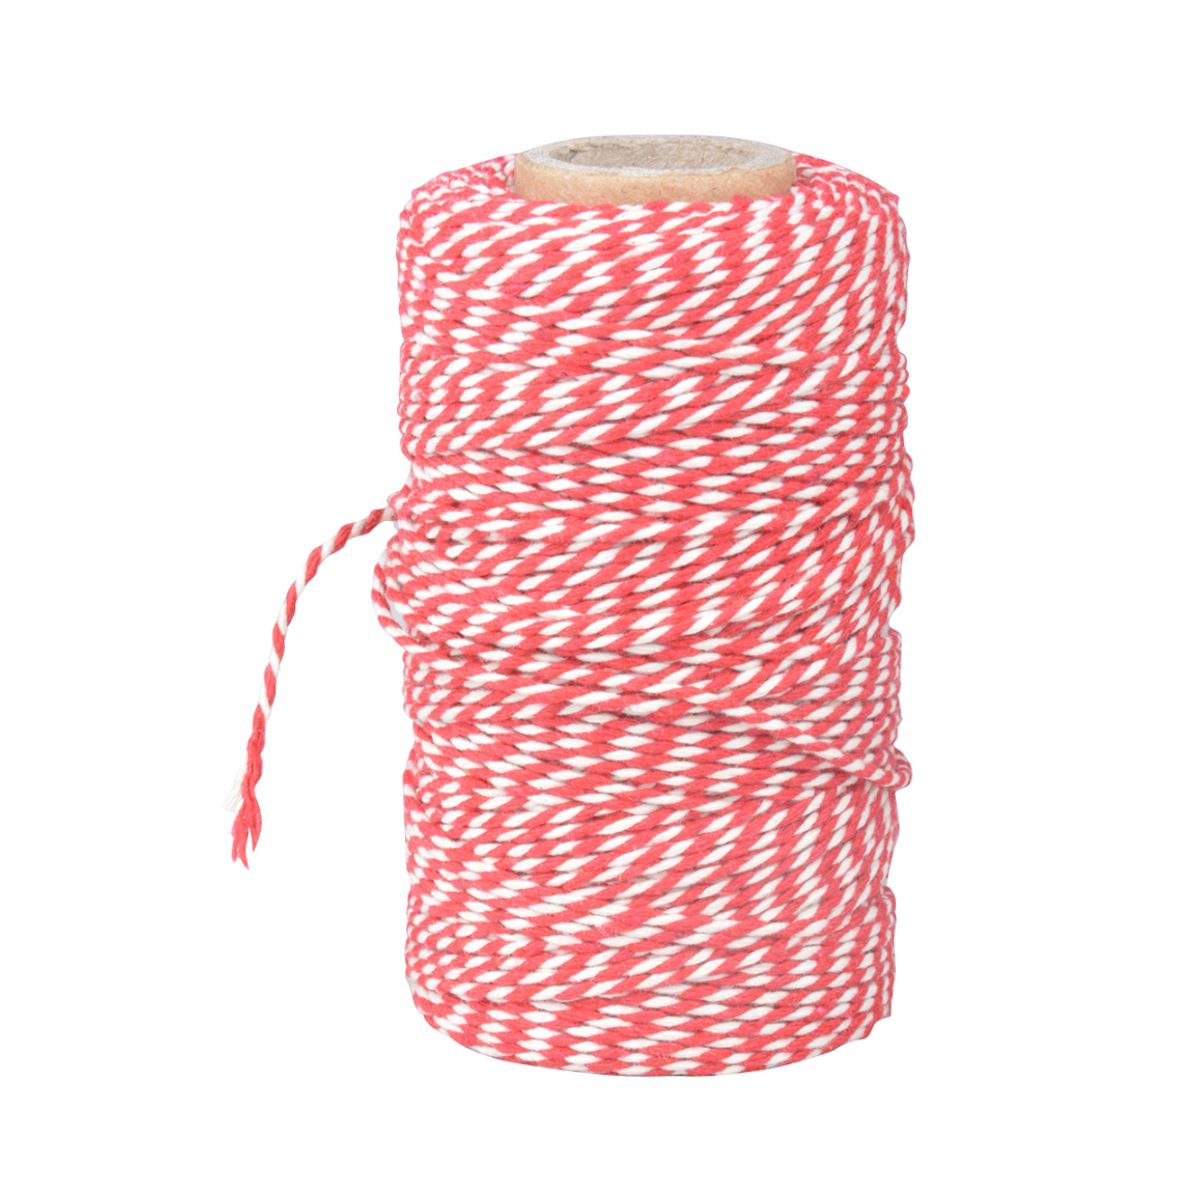 Bucatarie - Sfoara alb/rosu pentru bucatarie 100 m Cooking yarn Esschert Design, hectarul.ro